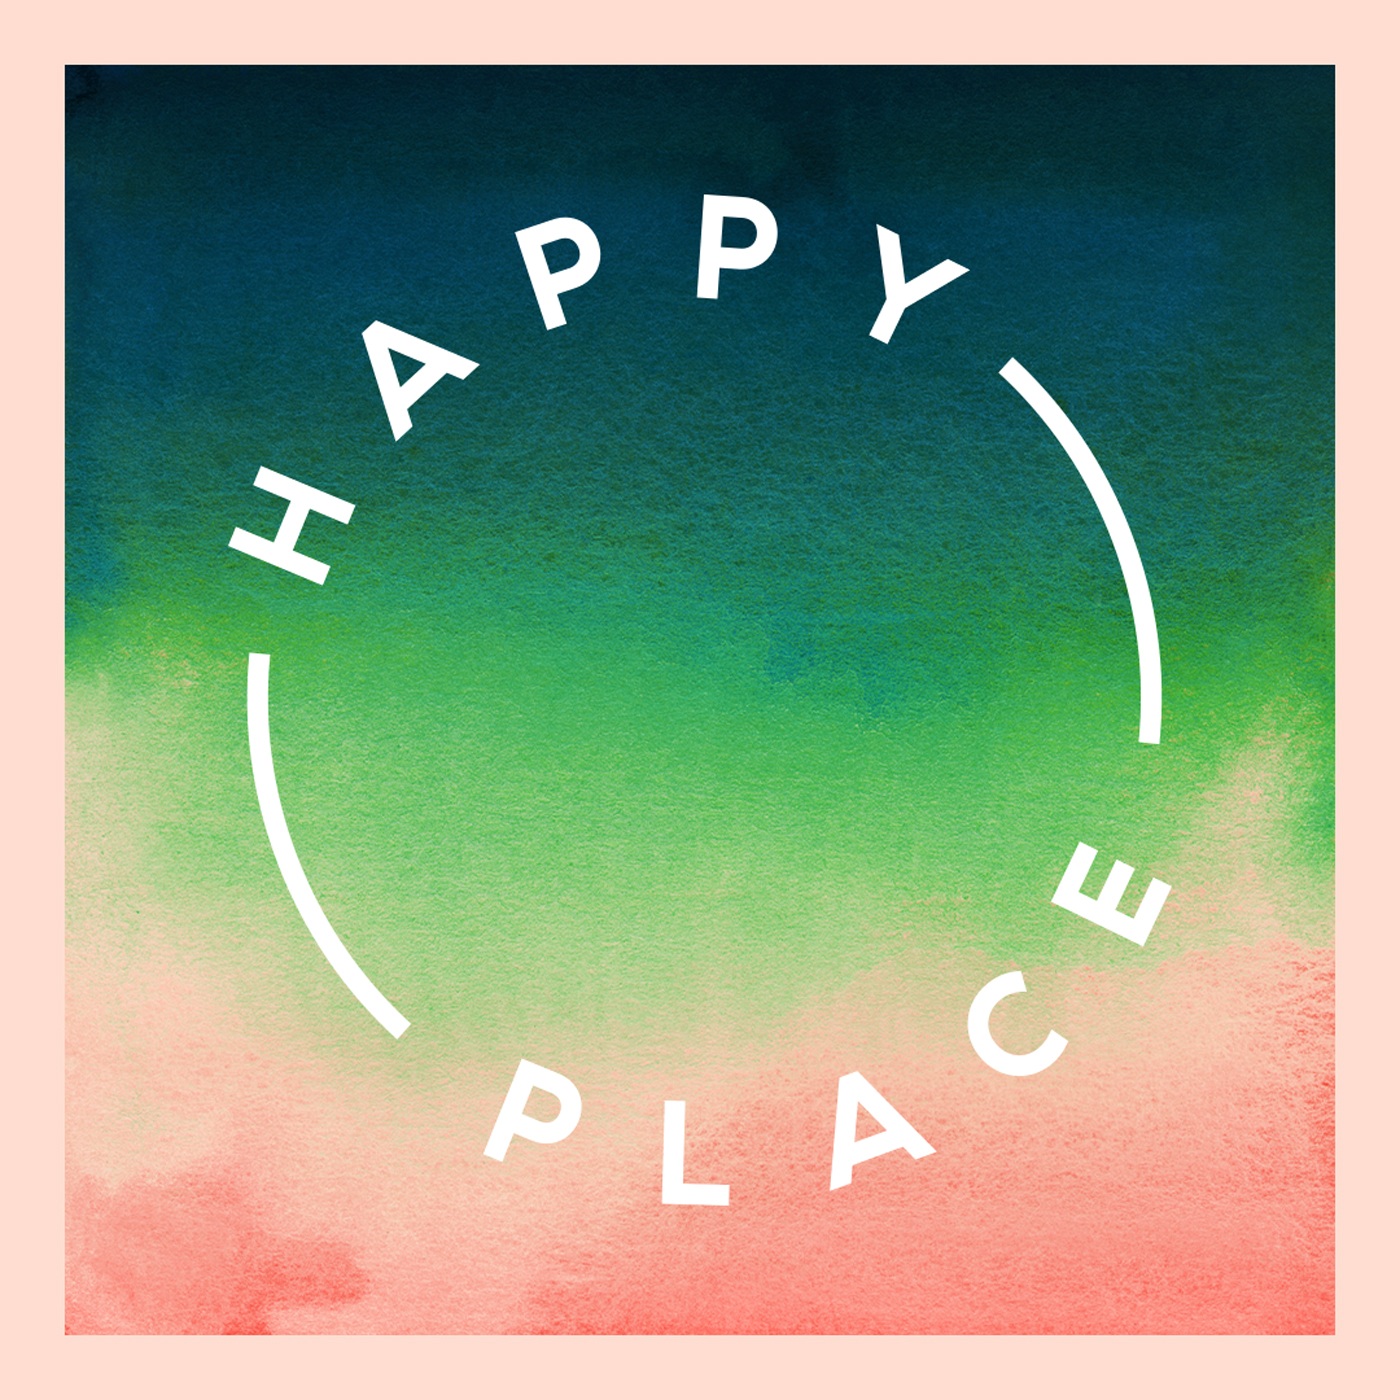 Ludovico Einaudi on Happy Place - The Album